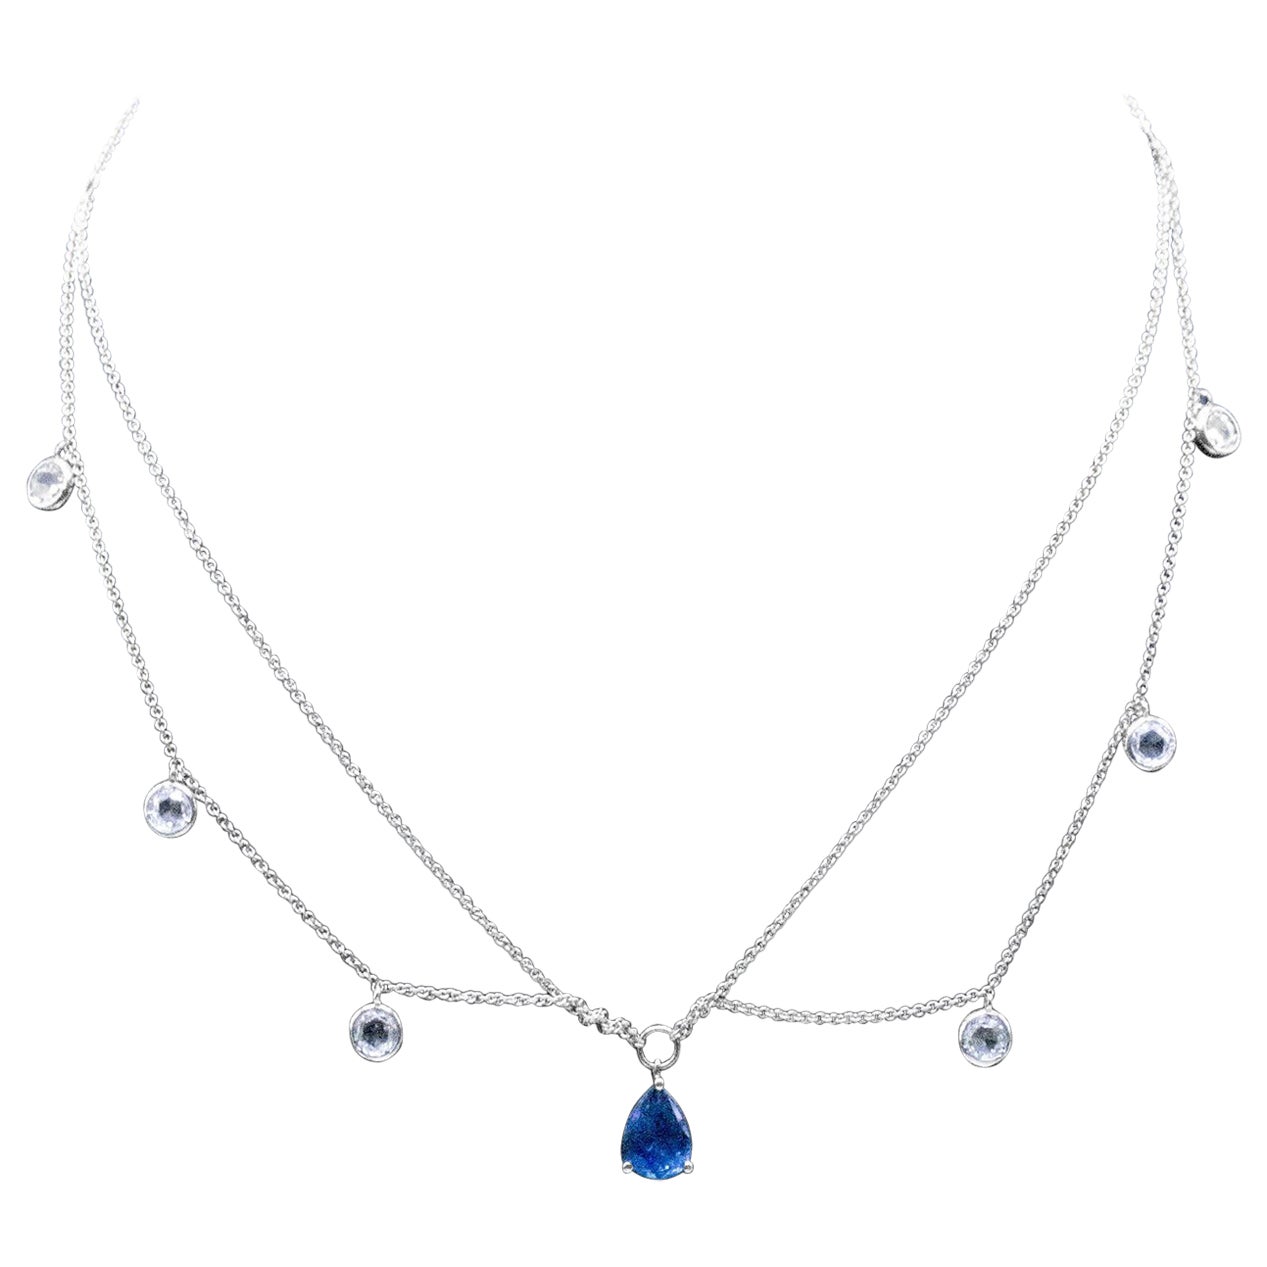 18K White Gold 7/8 Carat Diamond and Blue Sapphire Multi-Strand Pendant Necklace